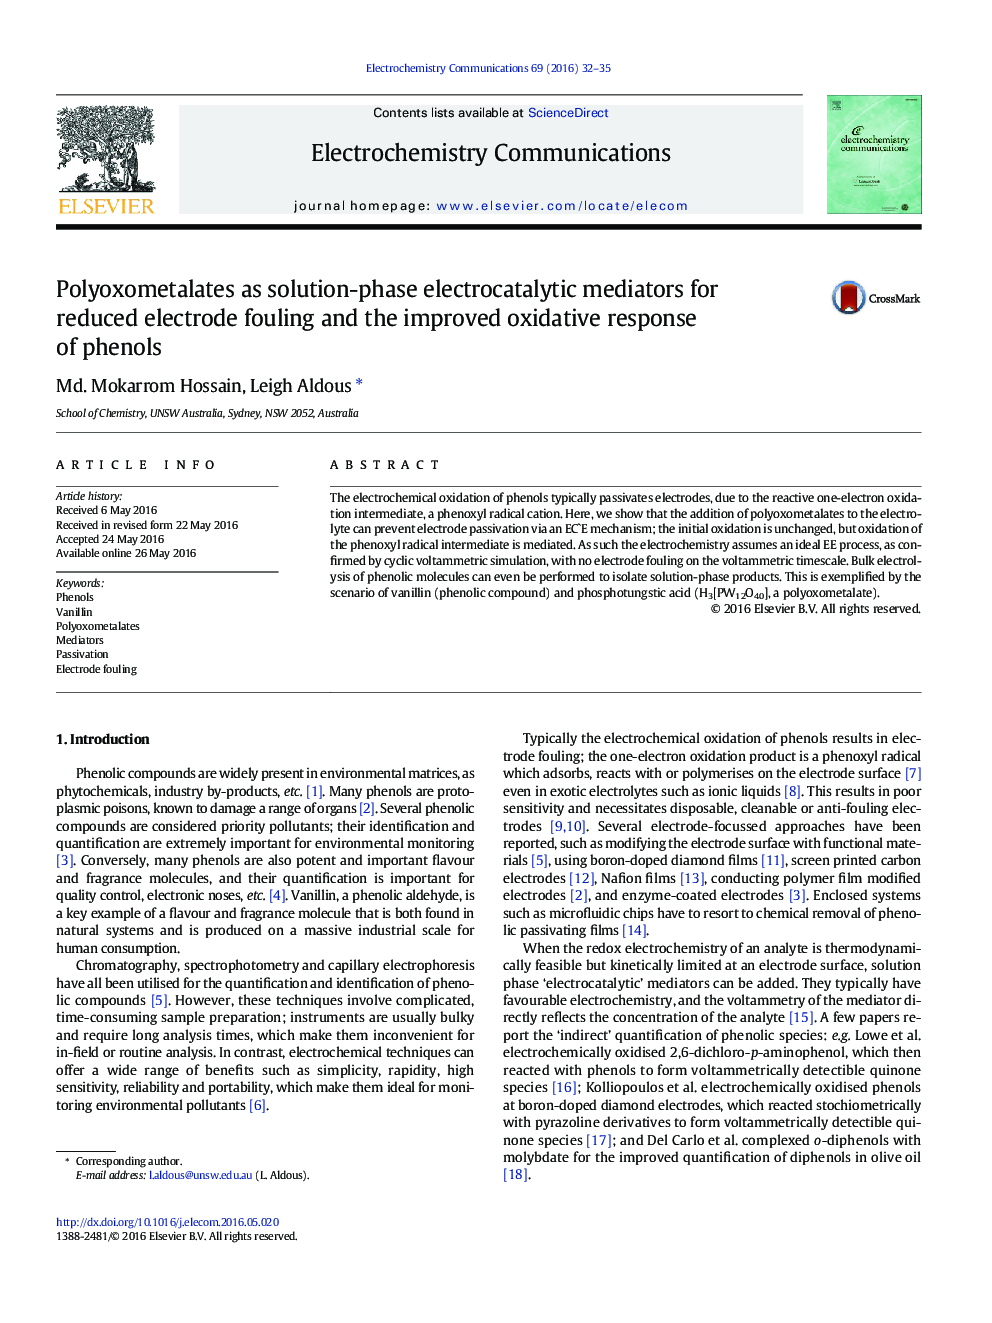 Polyoxometalates به عنوان واسطه های الکتروکاتالیستی فاز راه حل برای کاهش فرسایش الکترود و بهبود پاسخ اکسیداتیو فنل ها